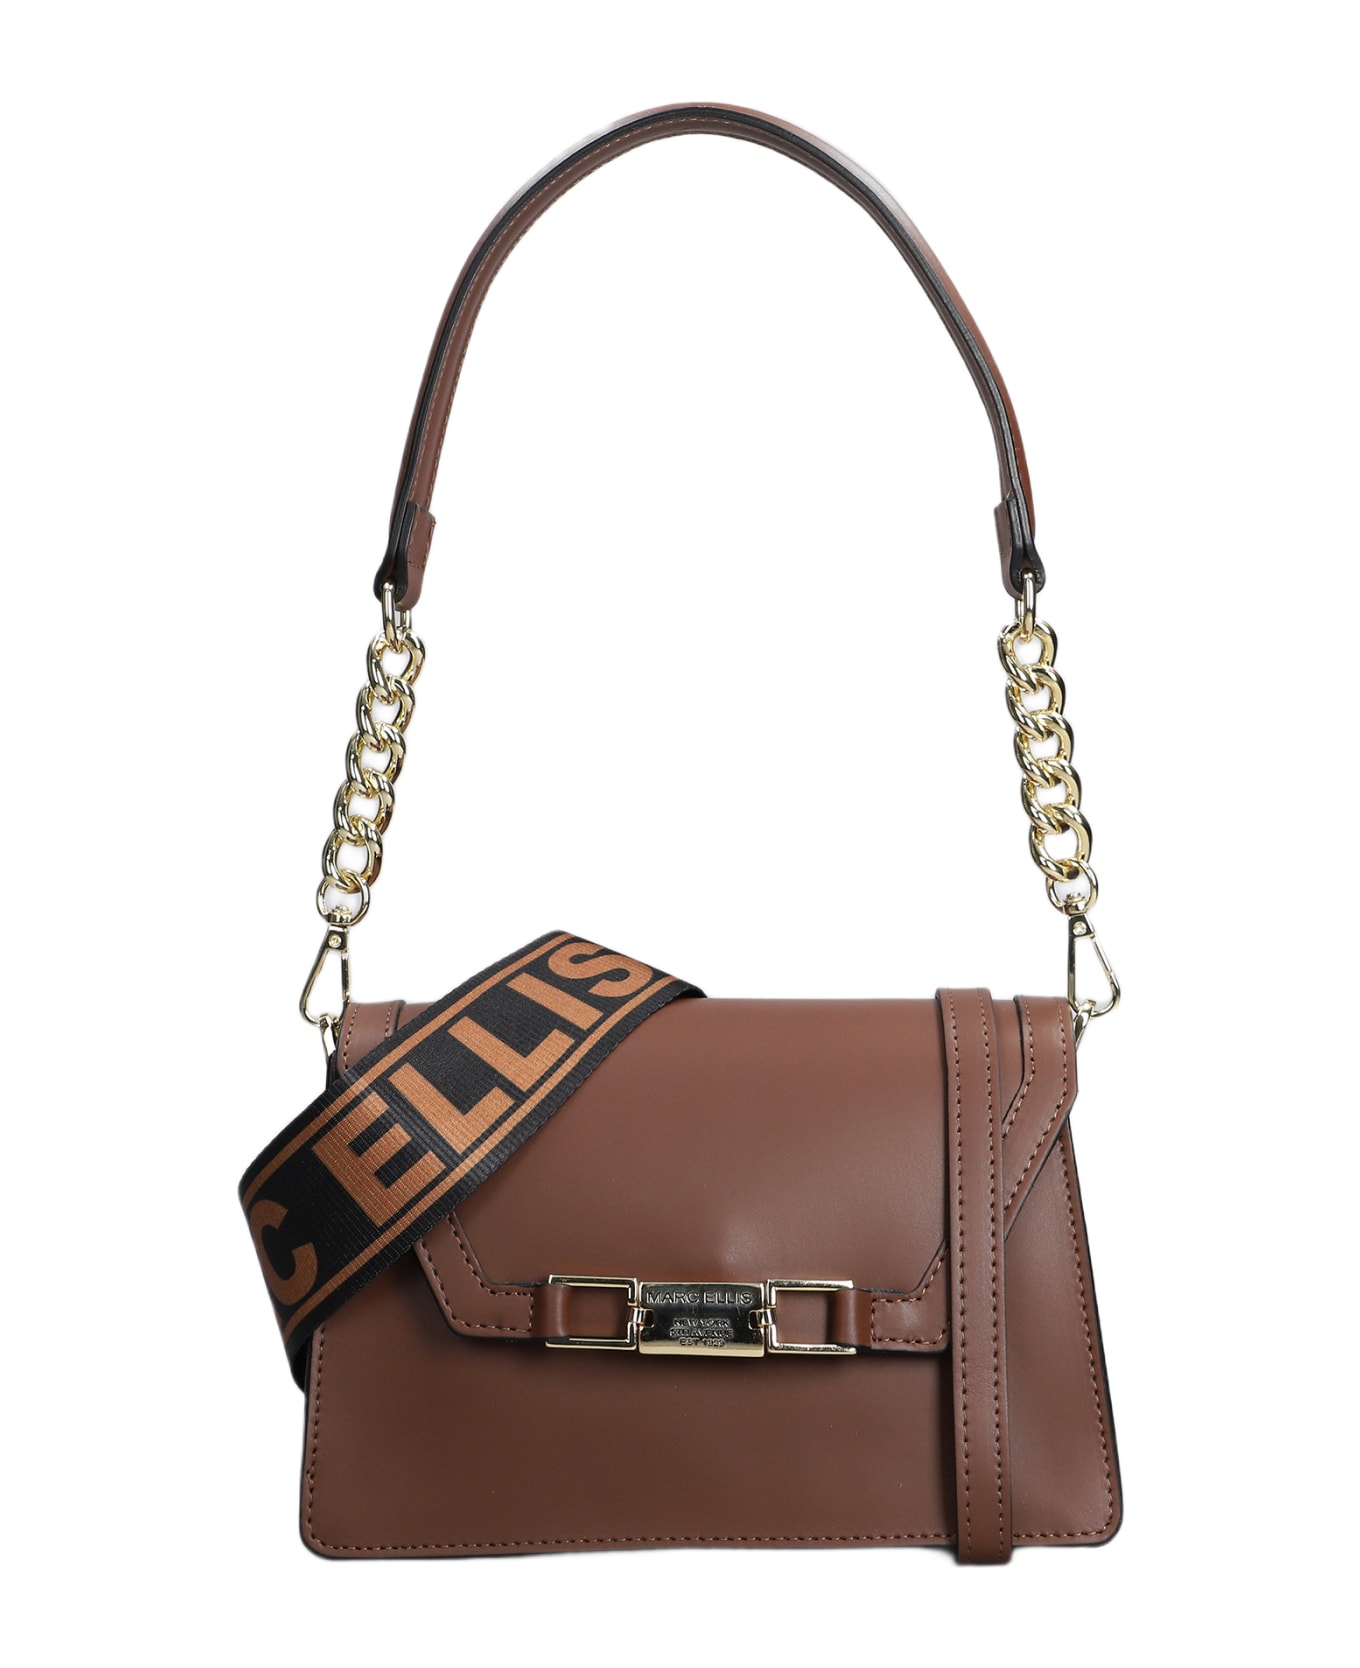 Marc Ellis Kourtney M Jackie Shoulder Bag In Brown Leather - brown